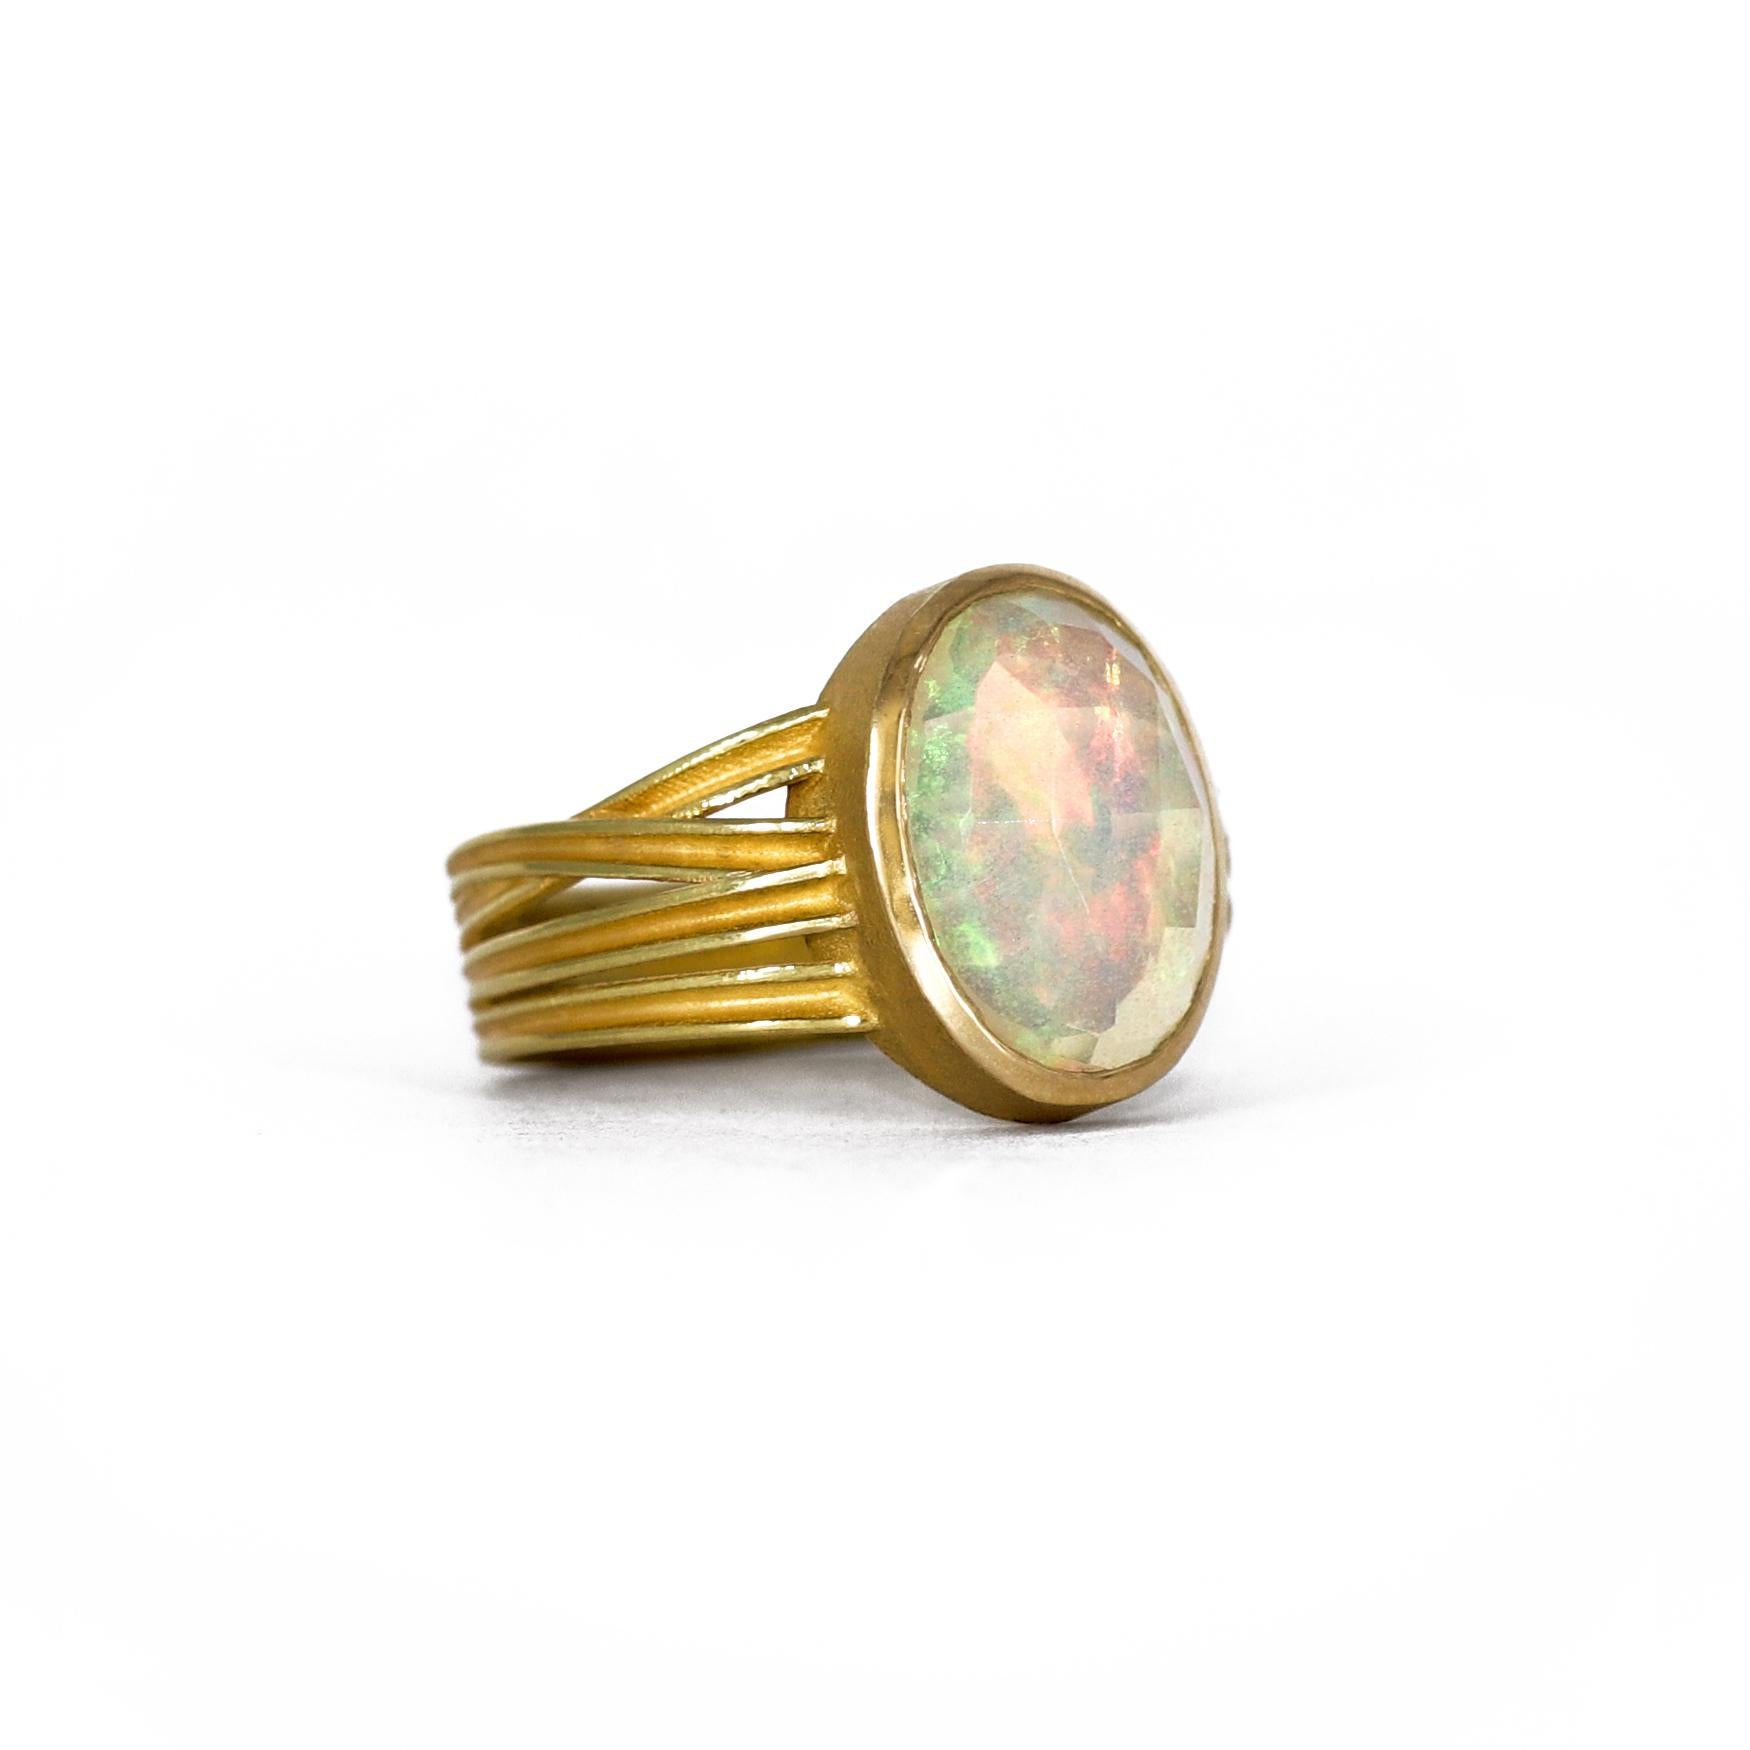 Artisan Barbara Heinrich Fiery Faceted Ethiopian Opal Multiwrap Gold Ring